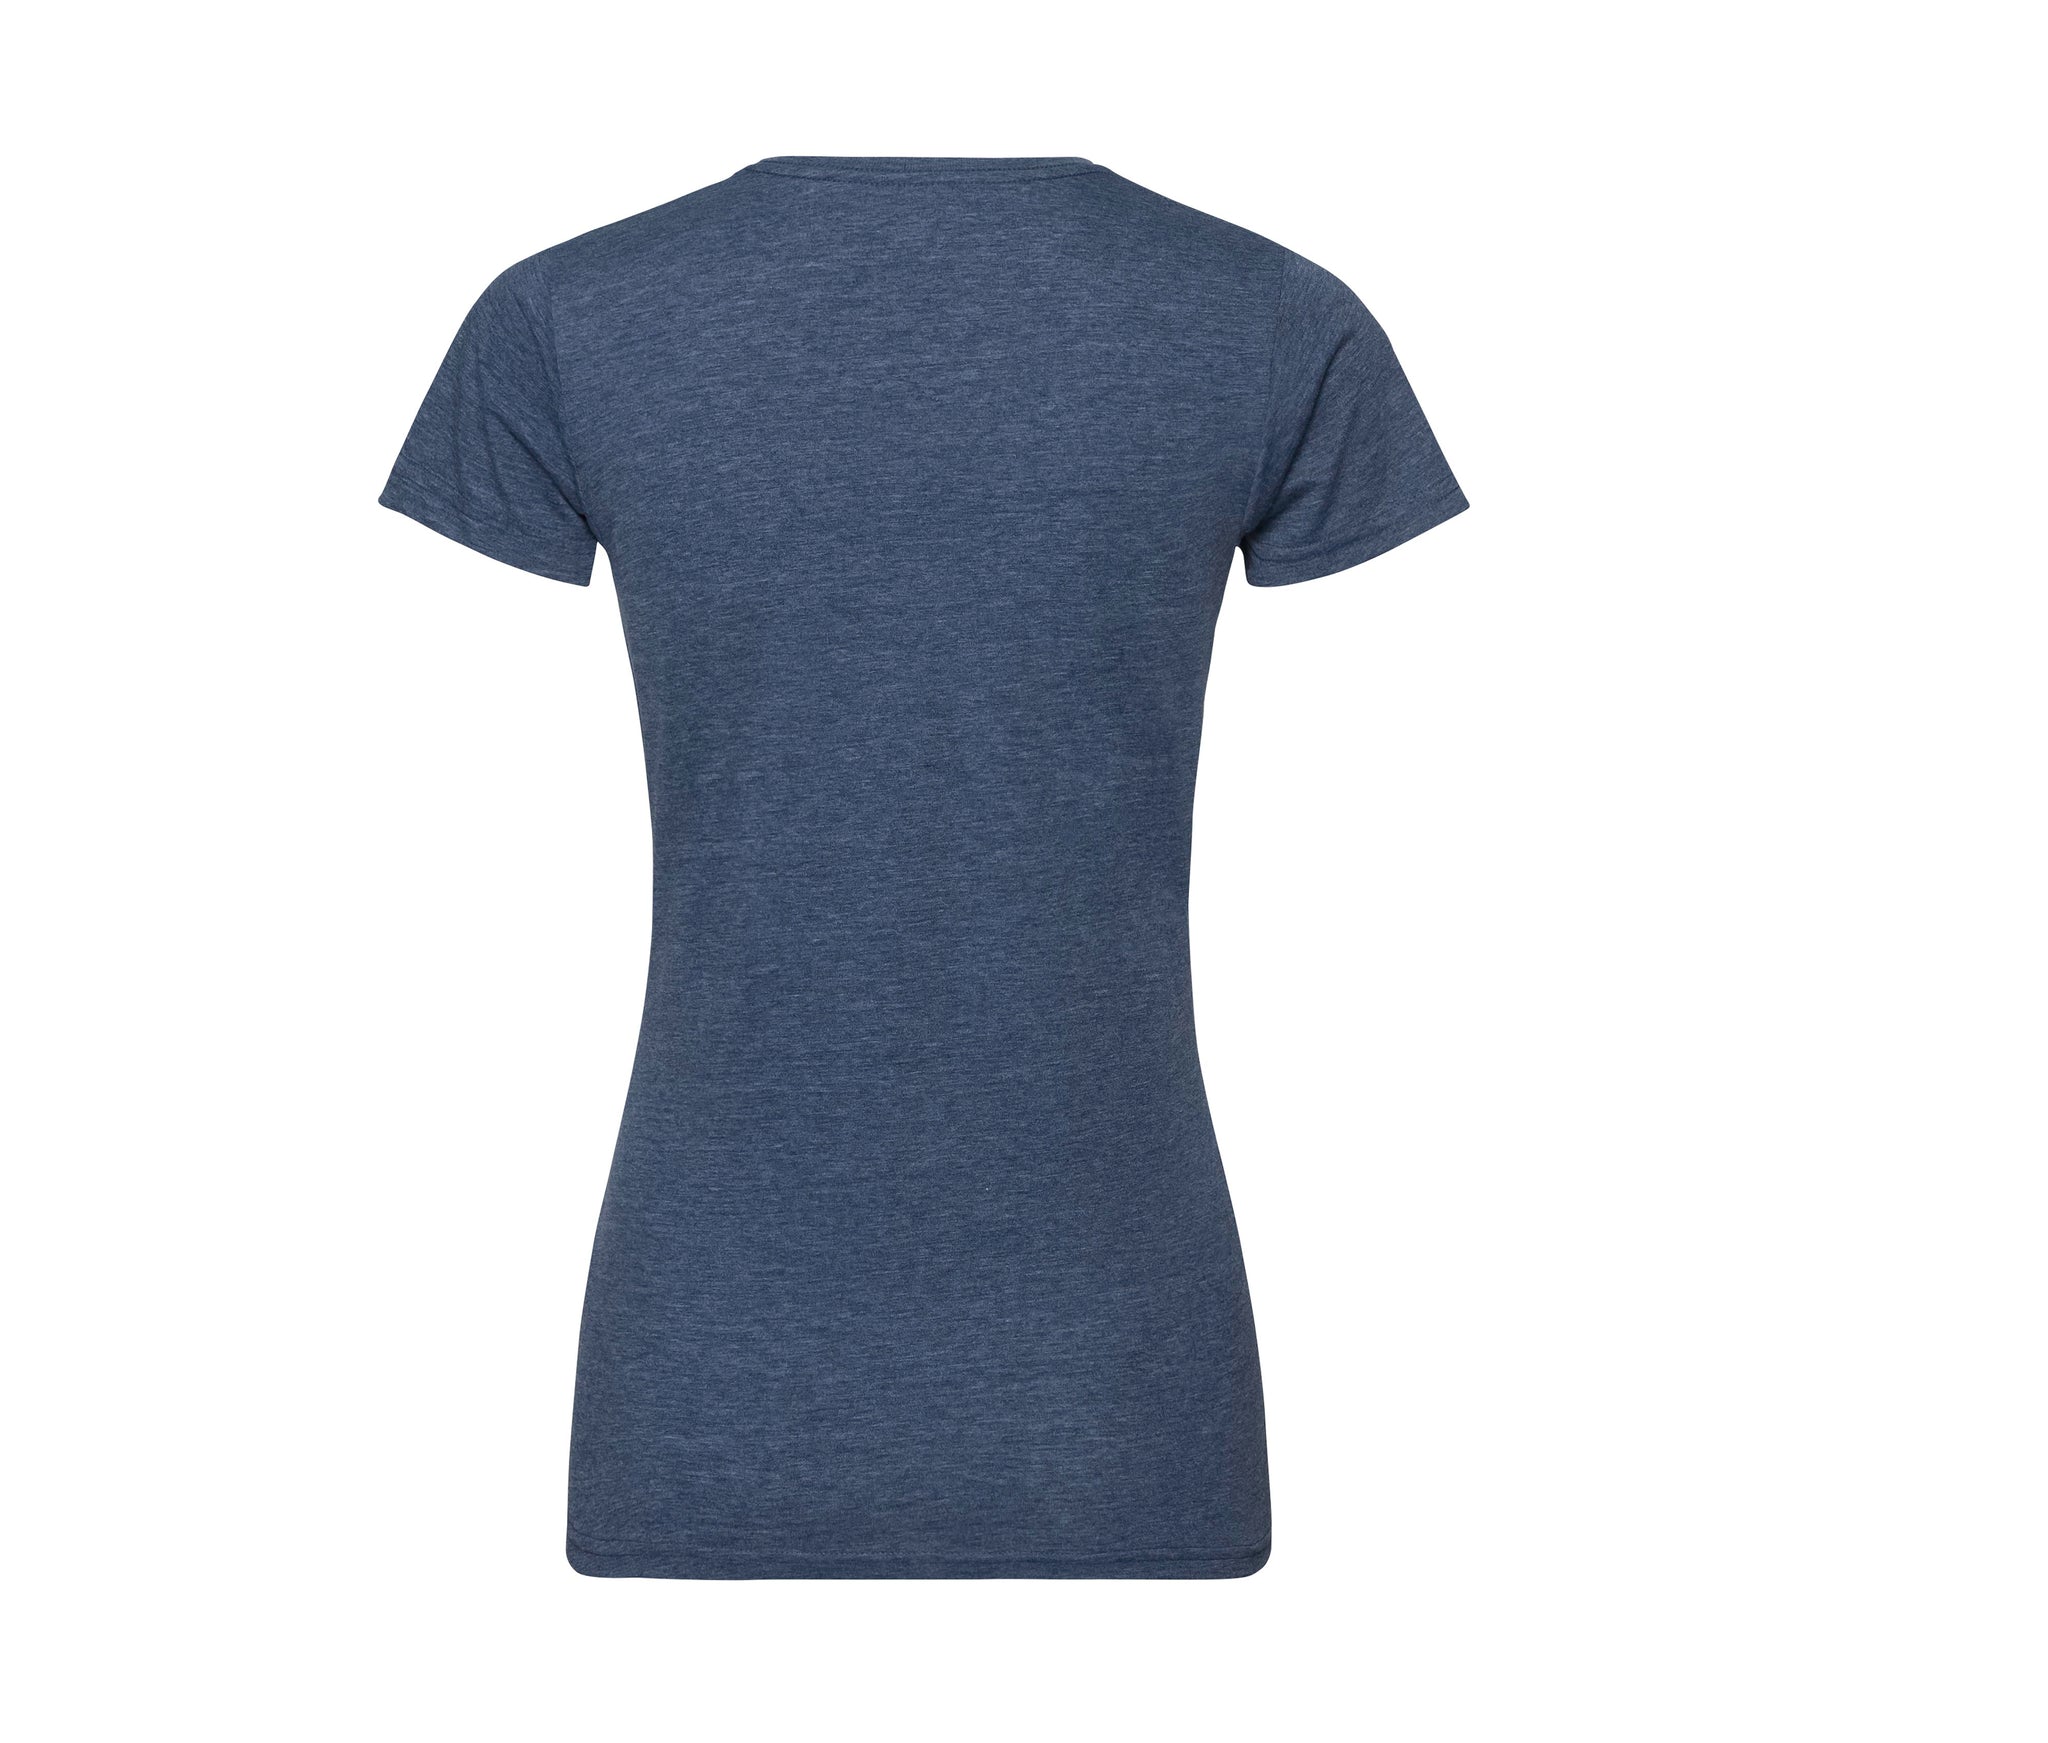 Radsow Apparel  - Tee-Shirt Manches Courtes Femme - Femme, Femmes, Manches Courtes - T-shirts